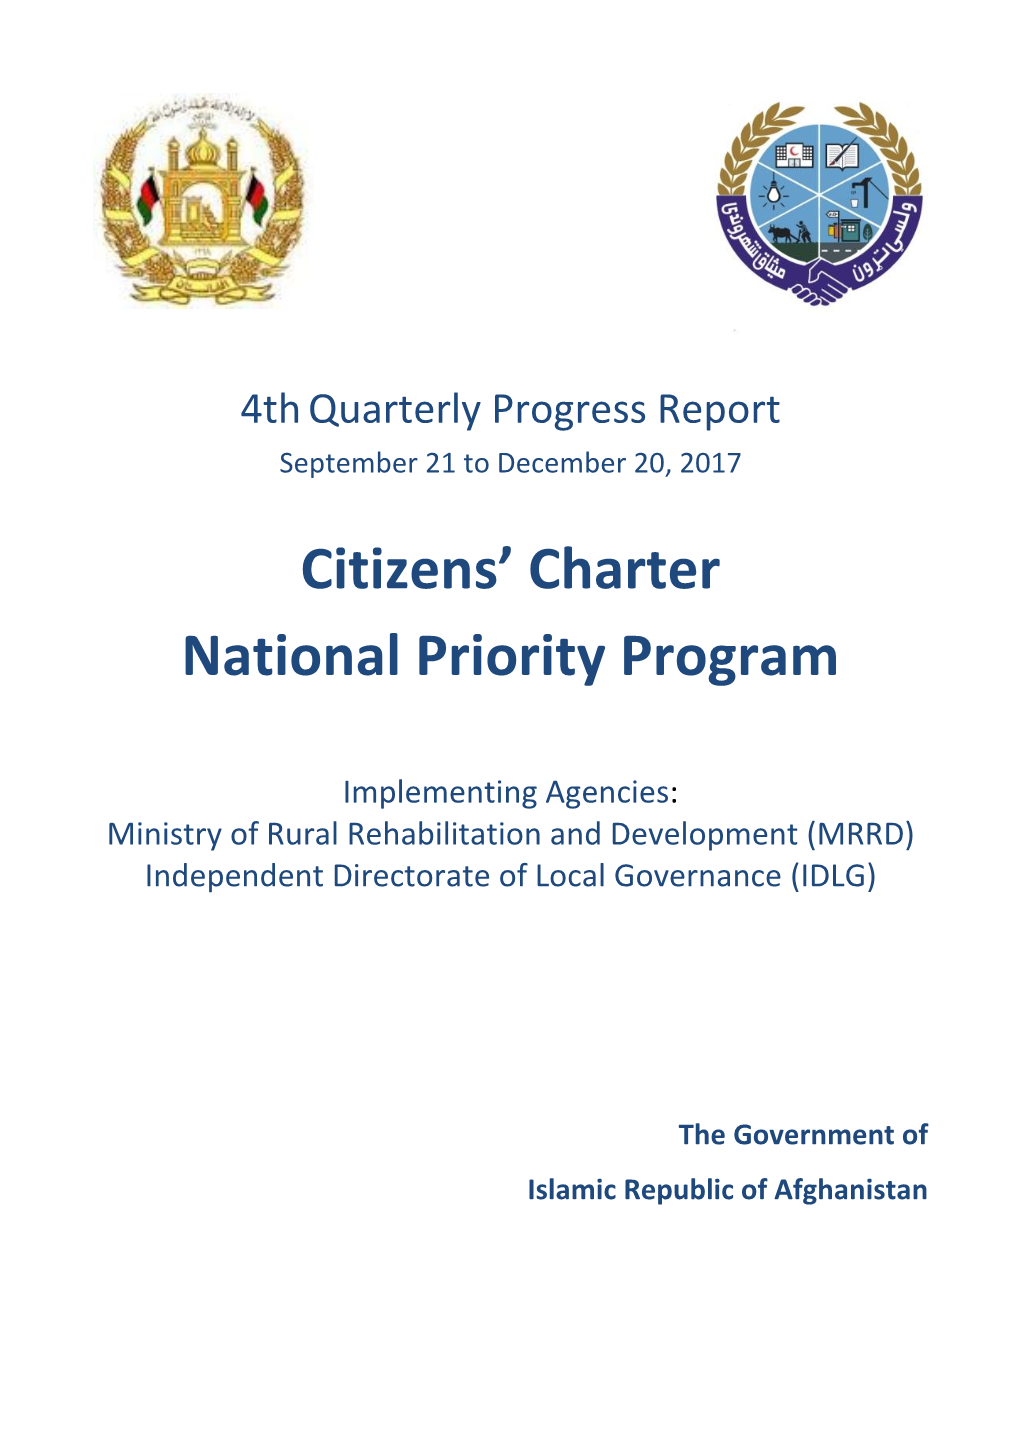 Citizens' Charter National Priority Program